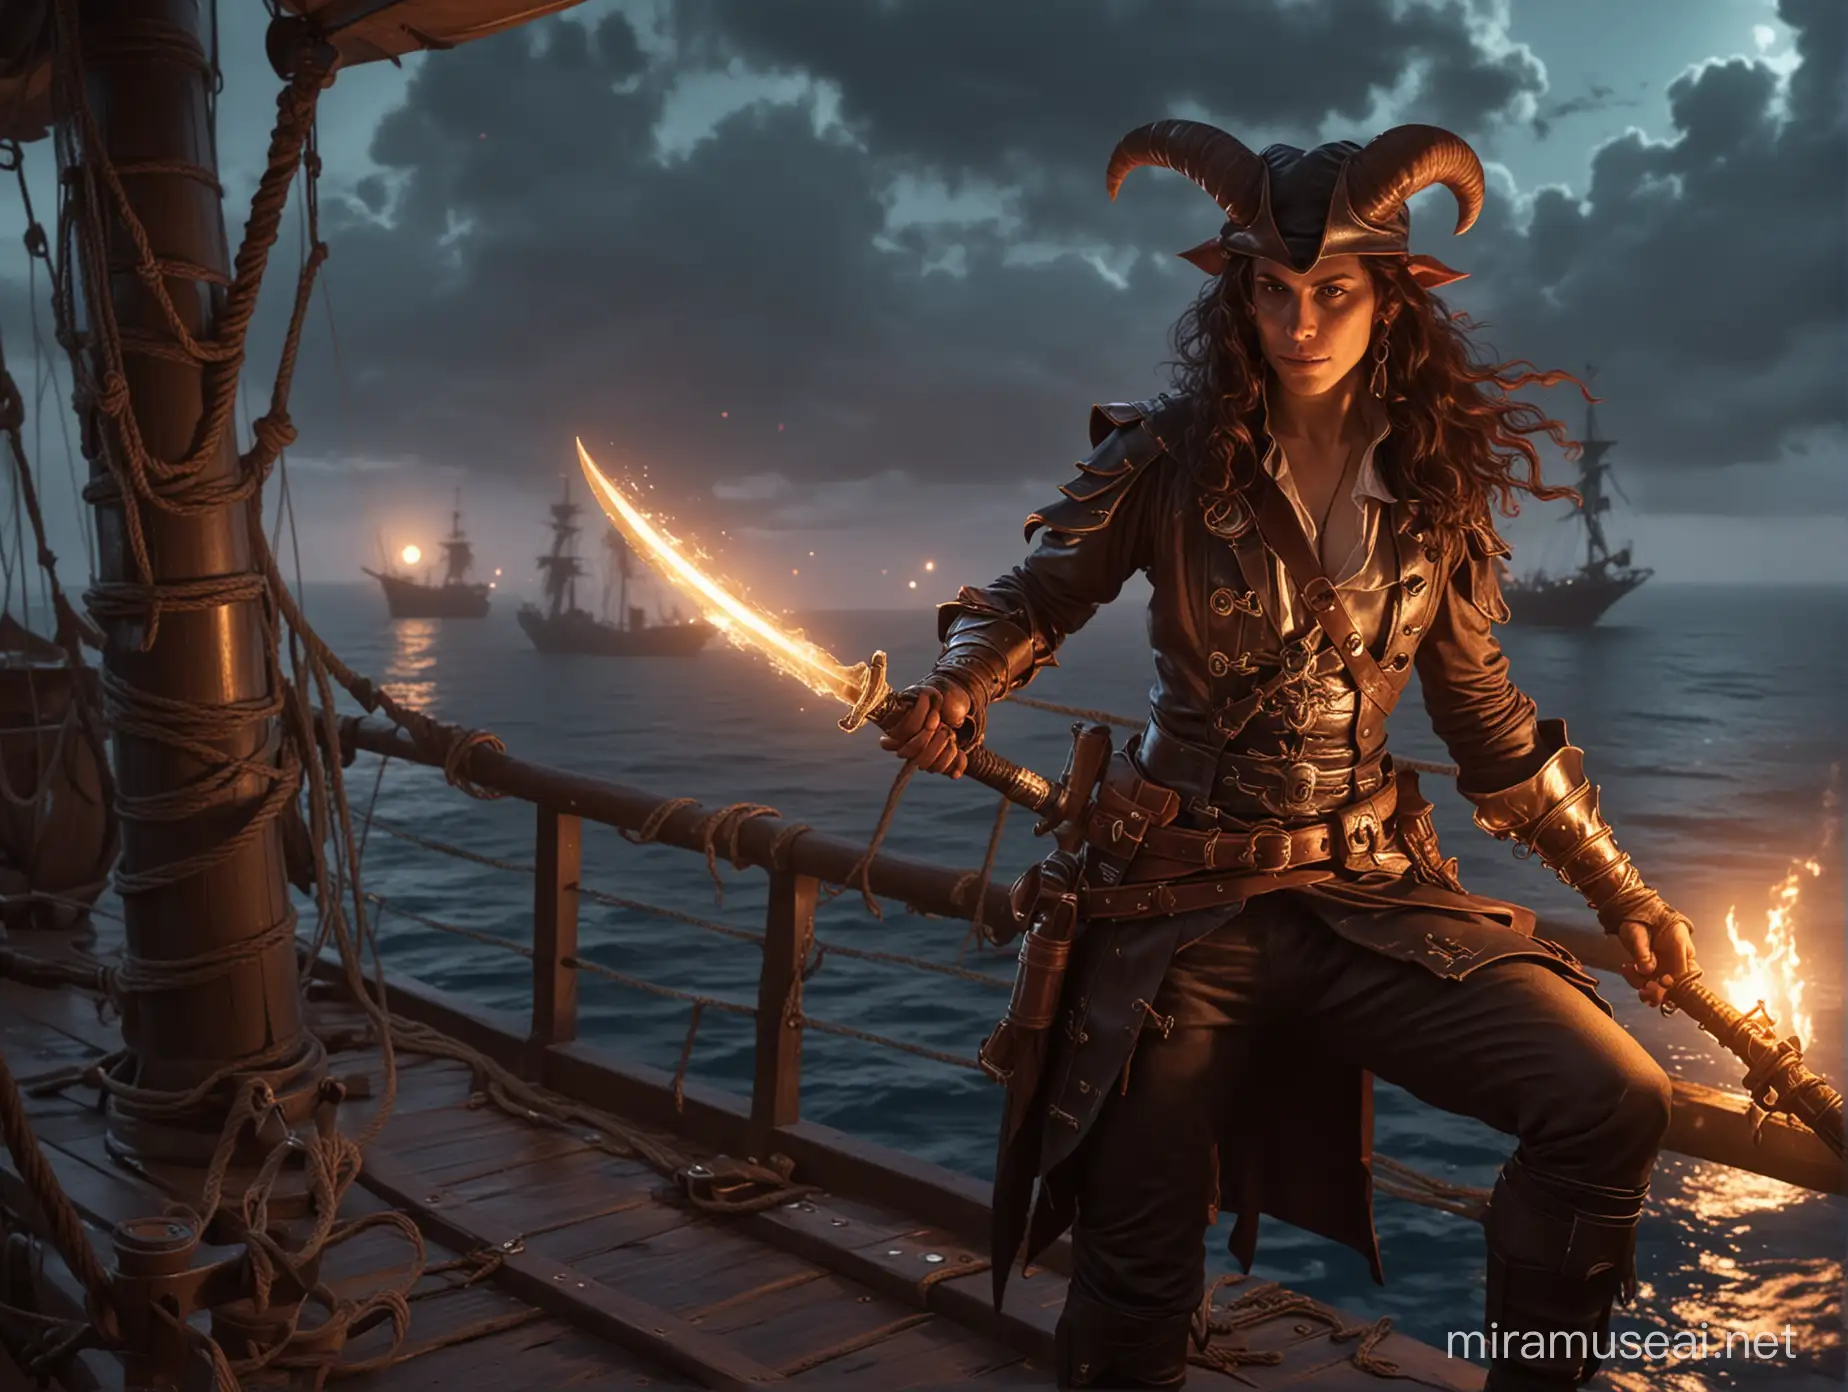 Glowing SwordWielding Tiefling Pirate Captain on Ship Deck